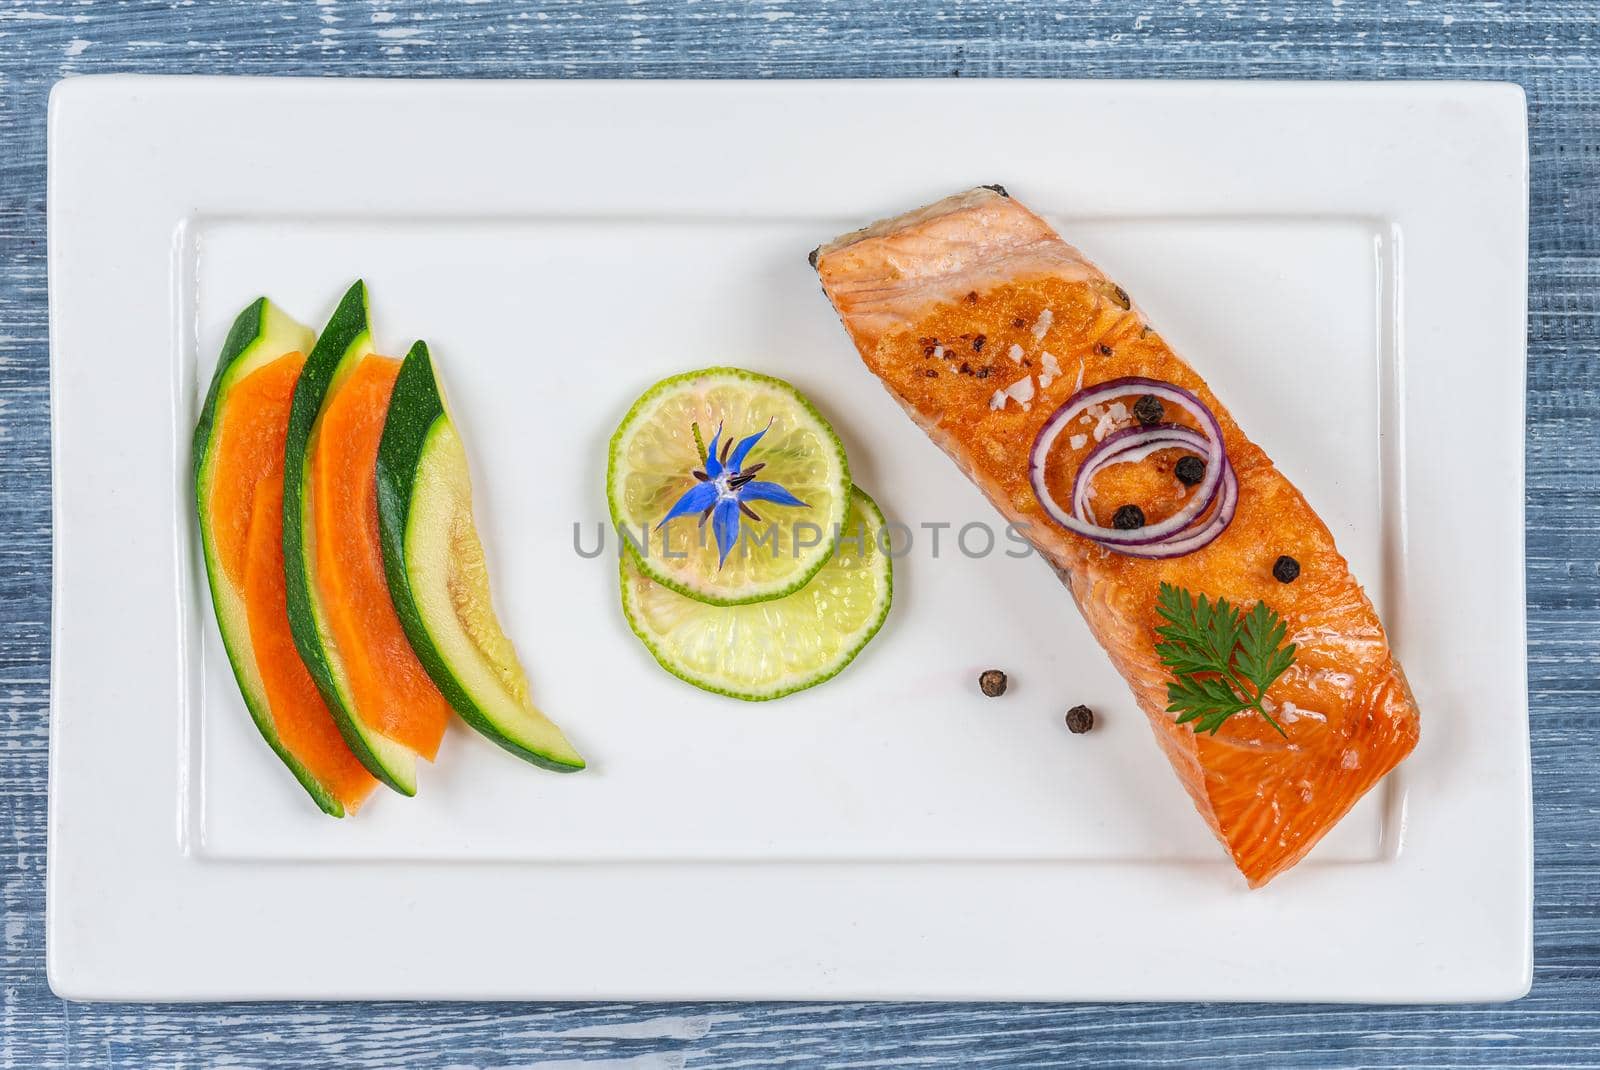 Mininalist presentation of a salmon plate - top view